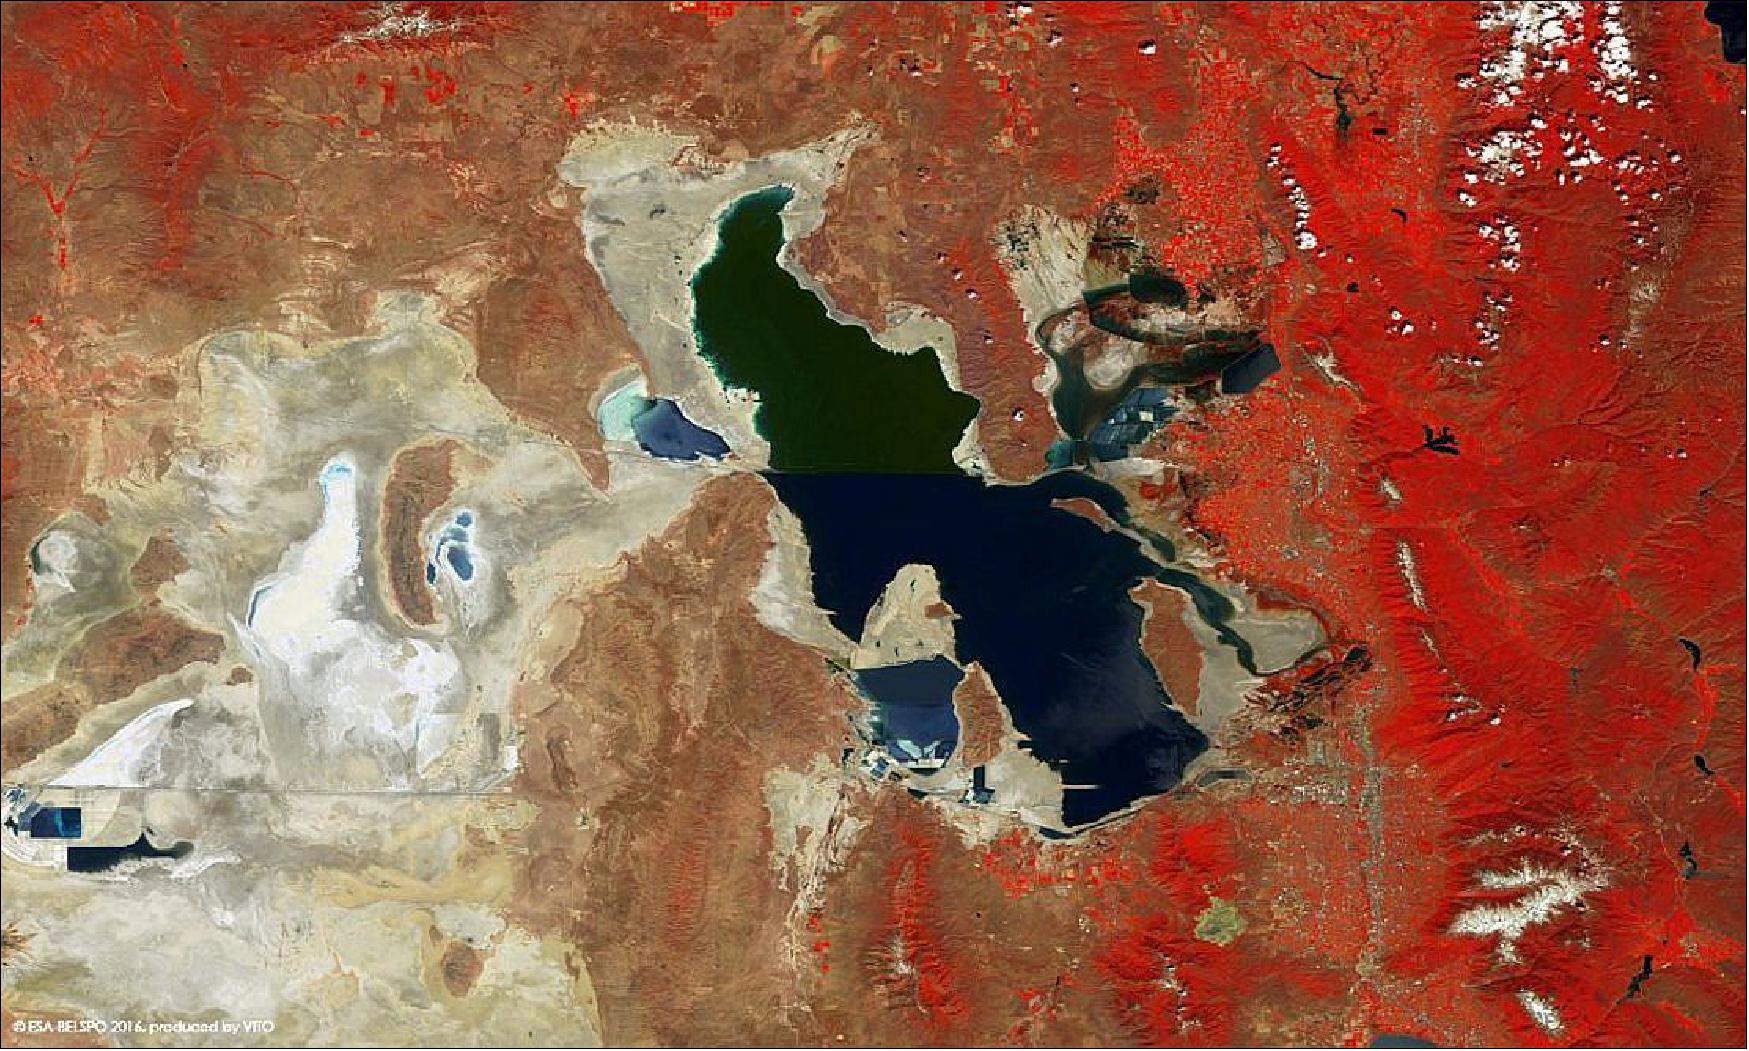 Figure 46: Great Salt Lake, the largest salt lake in the western hemisphere, captured by ESA's PROBA-V satellite in June 2016 (image credit: ESA/BELSPO, provided by VITO)